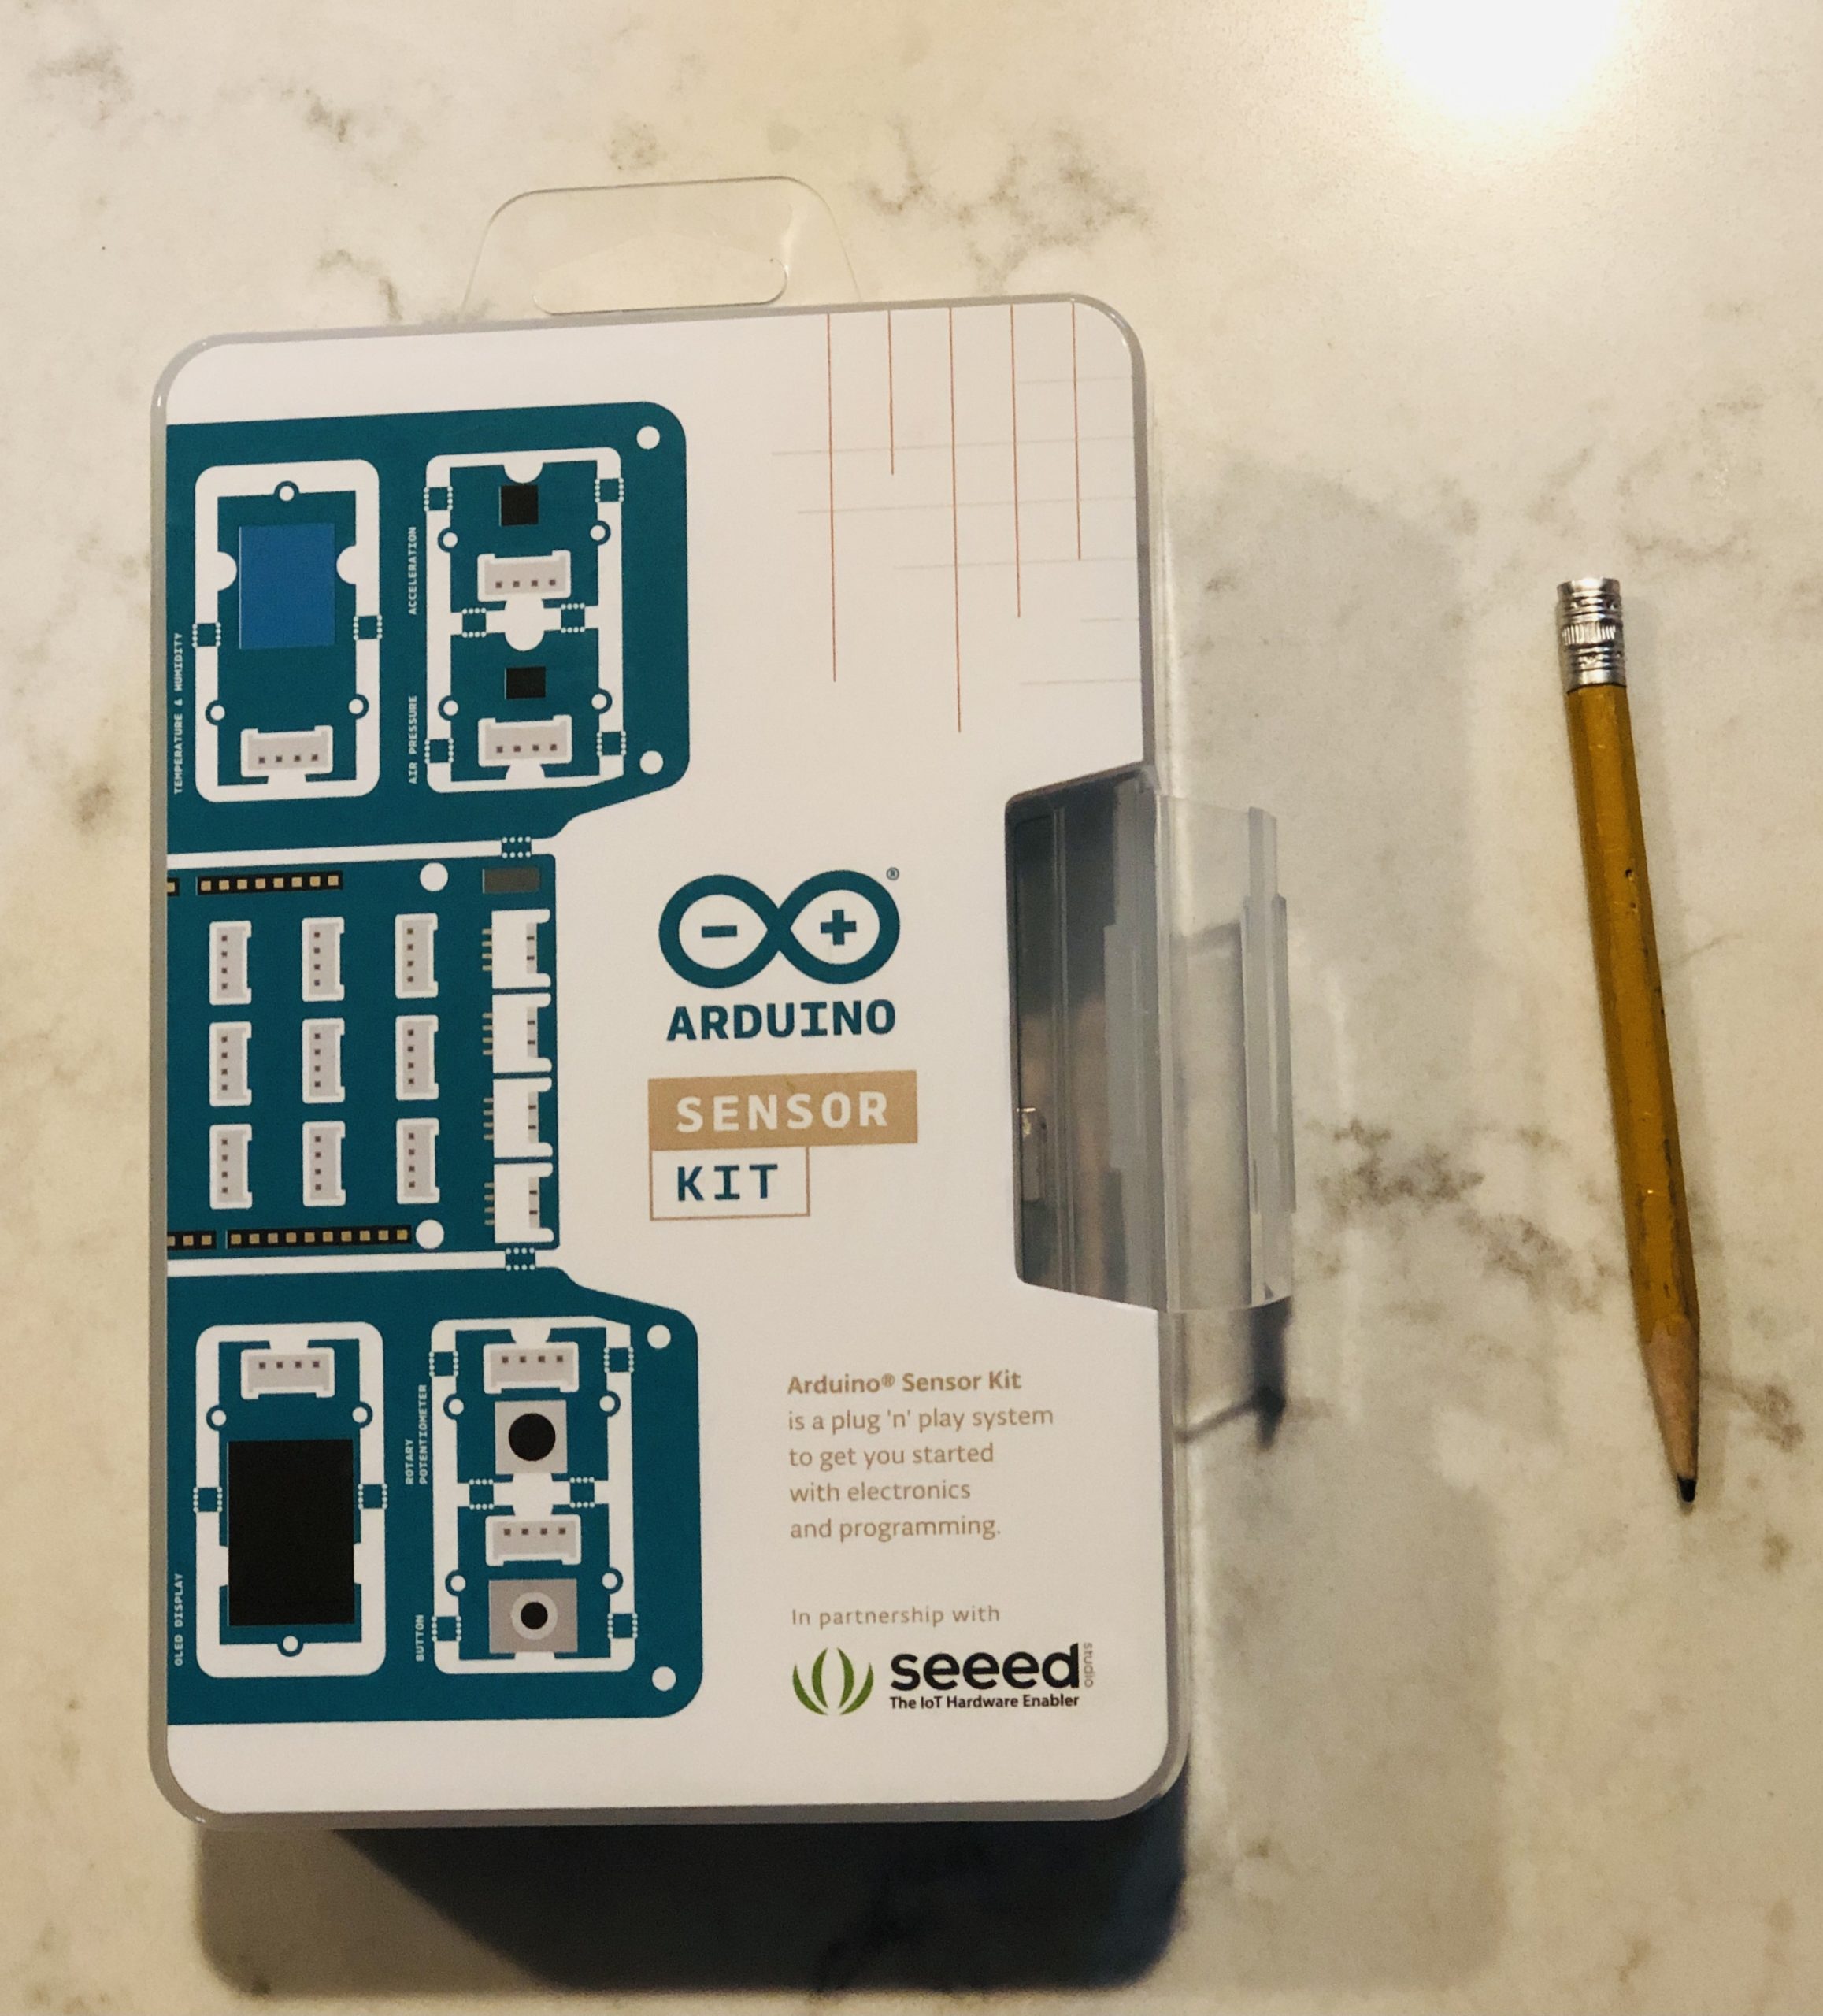 The box of Arduino Sensor Kit